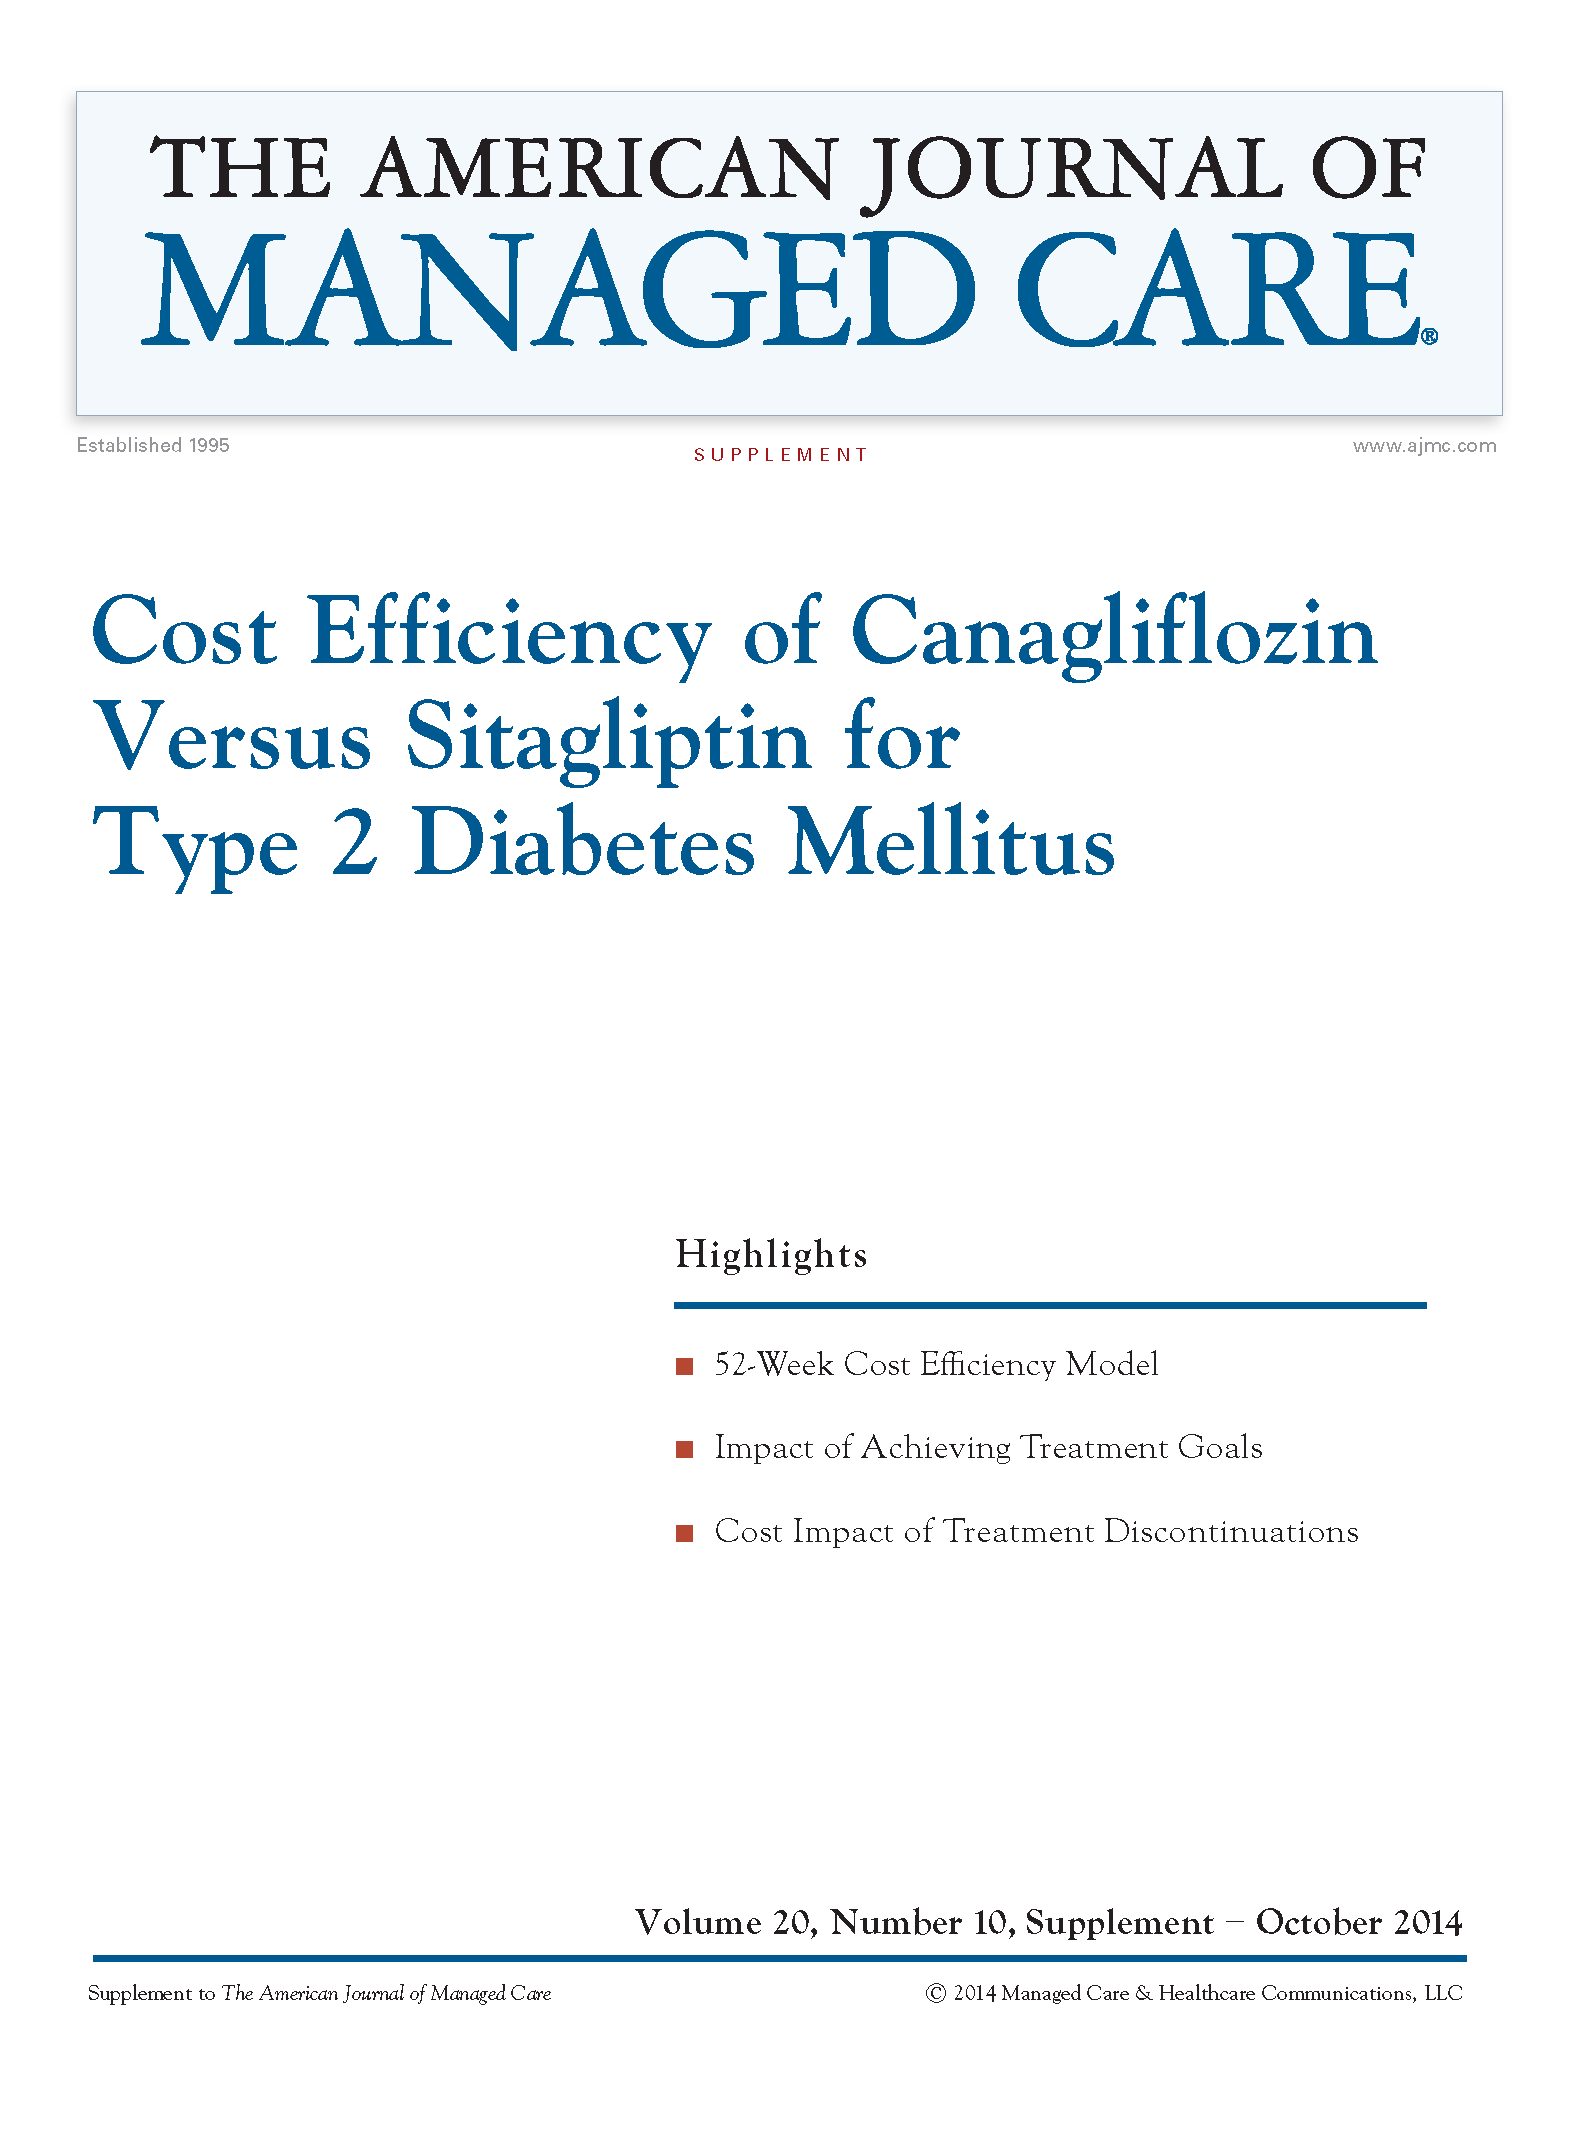 Cost Efficiency of Canagliflozin Versus Sitagliptin for Type 2 Diabetes Mellitus